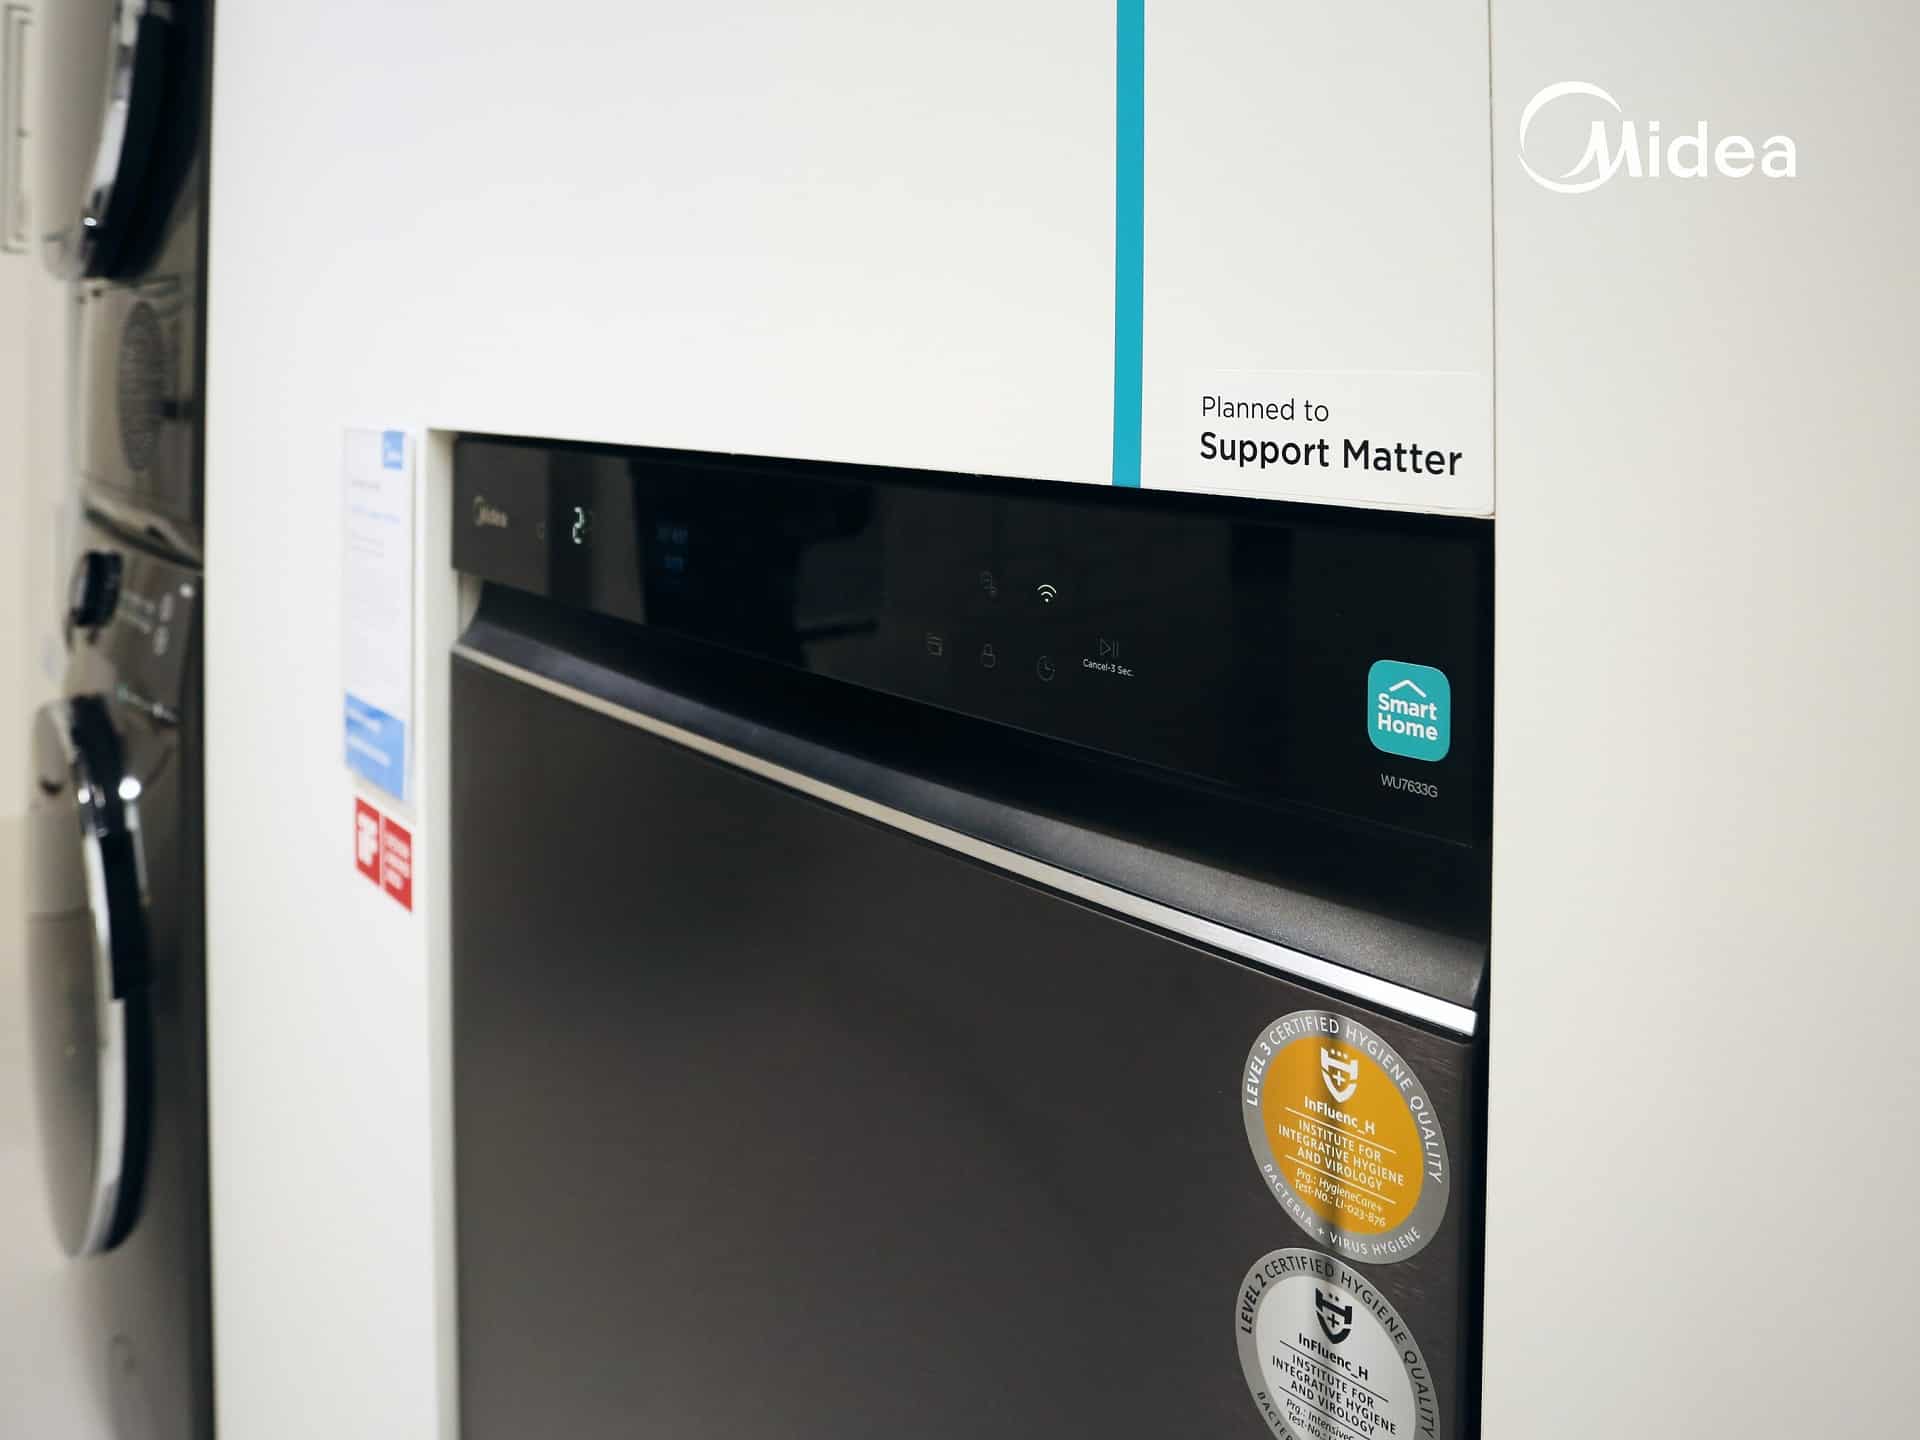 Midea Matter connected smart dishwasher